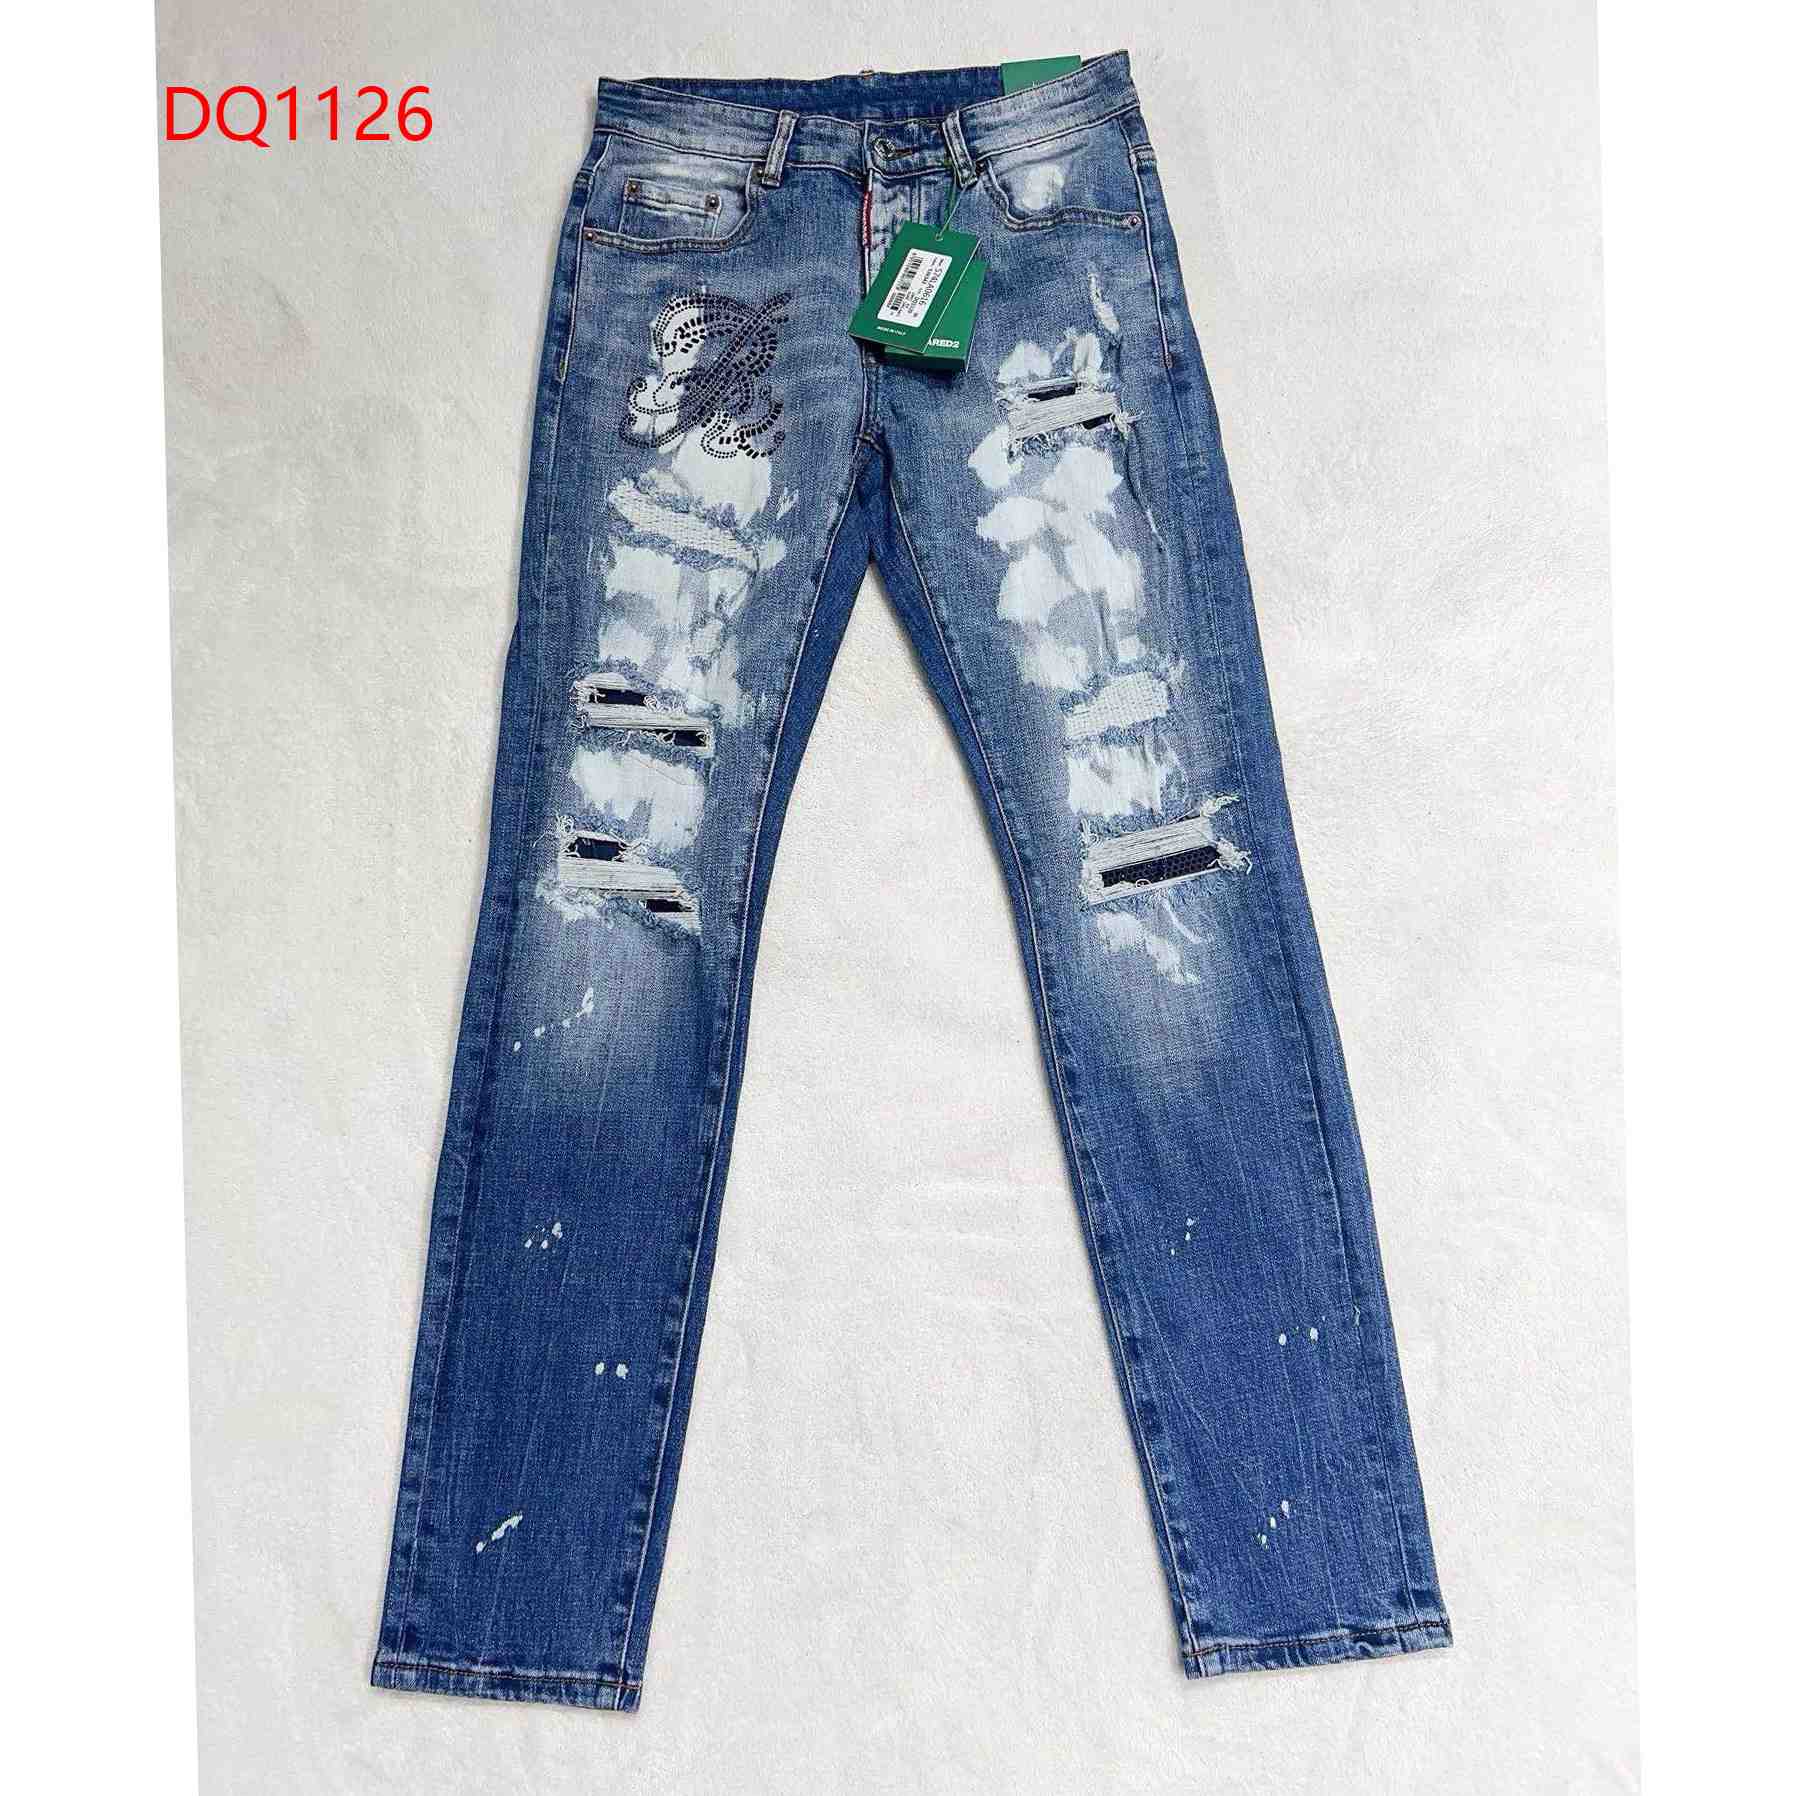 Dsquared2 Denim Jeans     DQ1126 - everydesigner